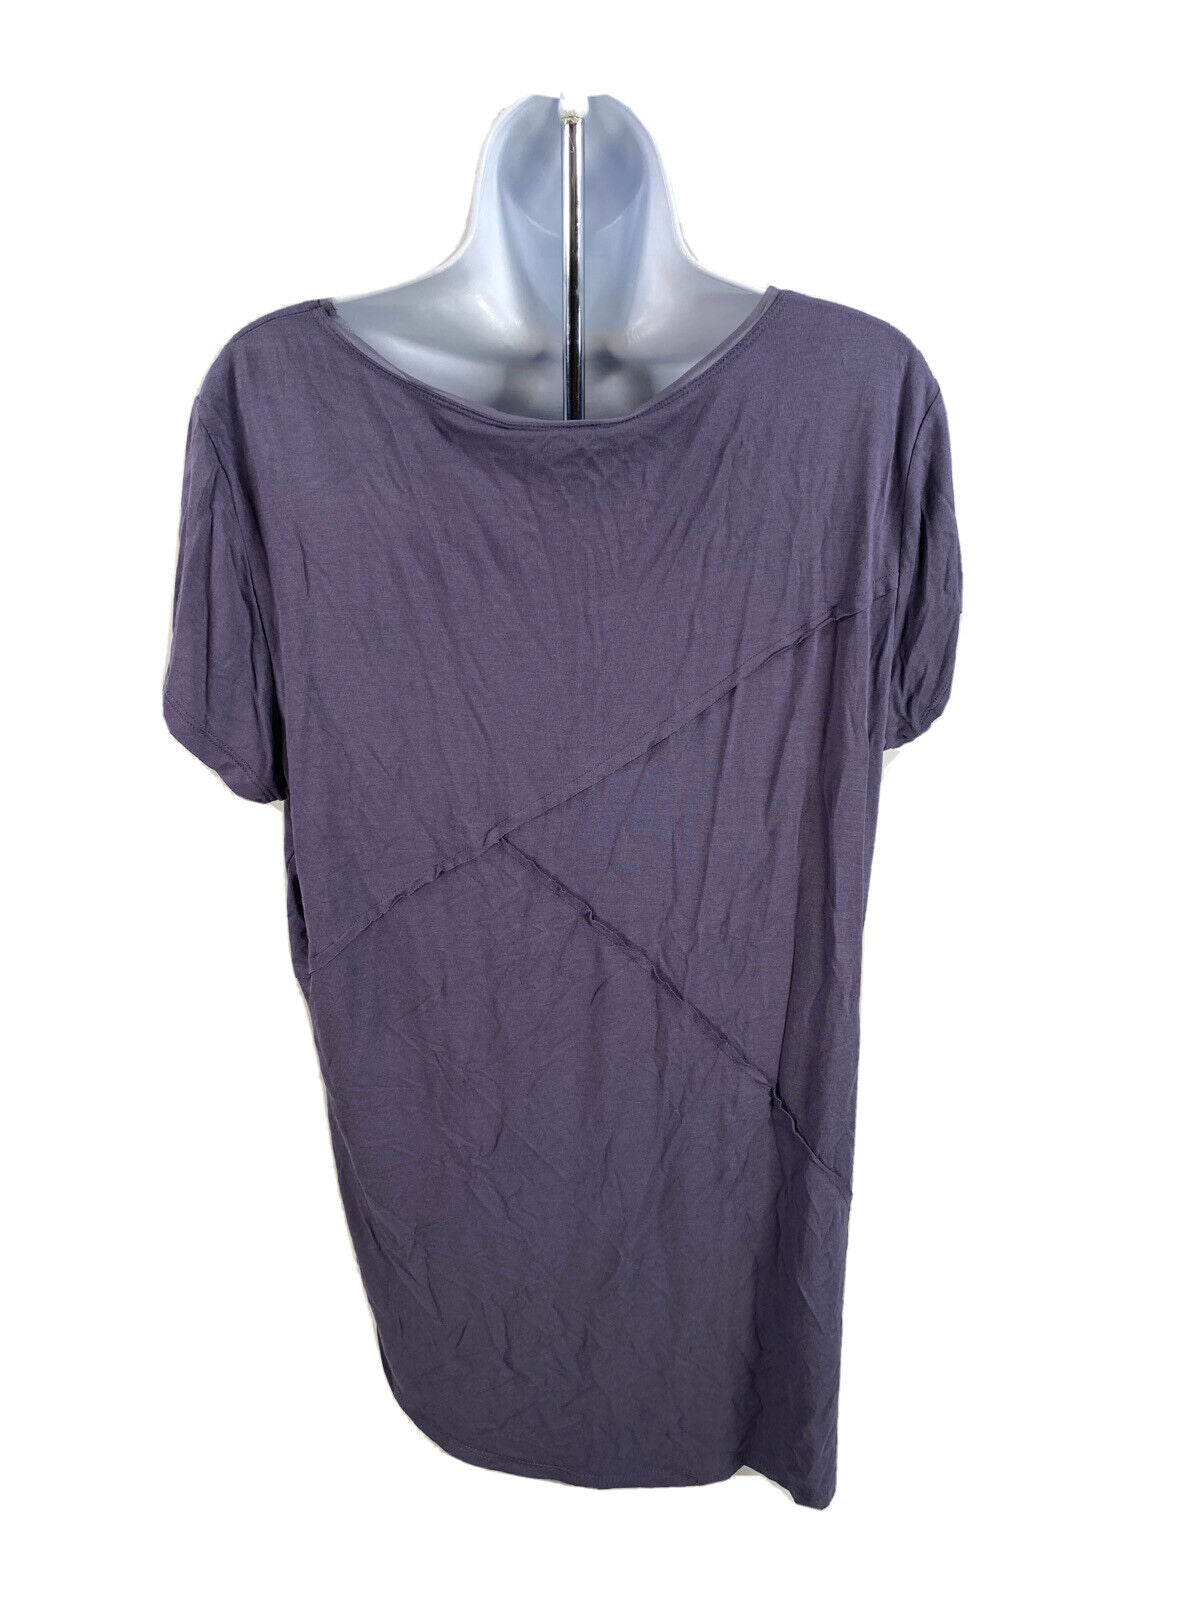 NEW Simply Vera Wang Women's Purple Short Sleeve T-Shirt - L